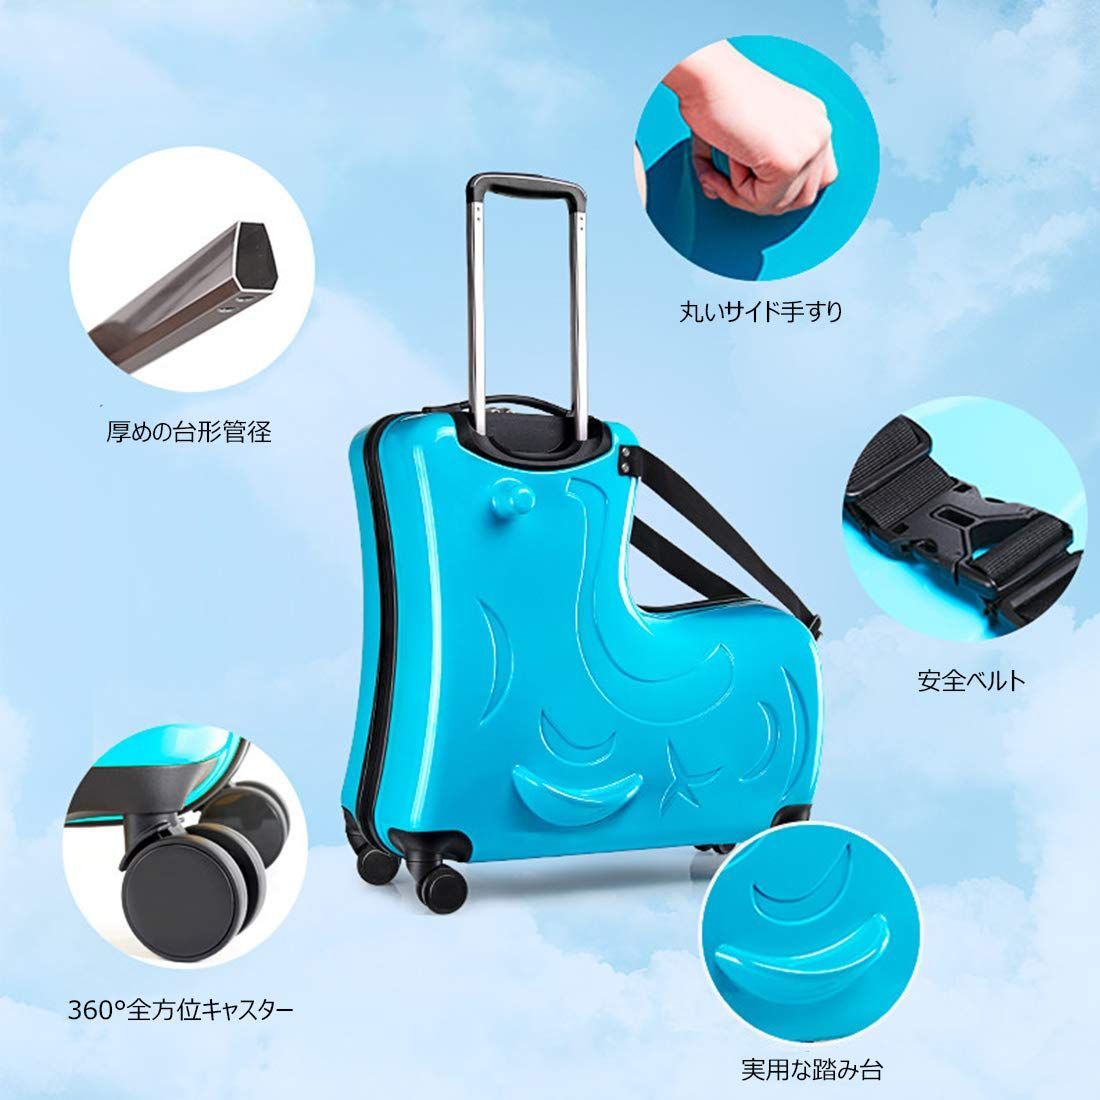 DINGHANG スーツケース 子供が乗れるスーツケース 子供用スーツケース ...